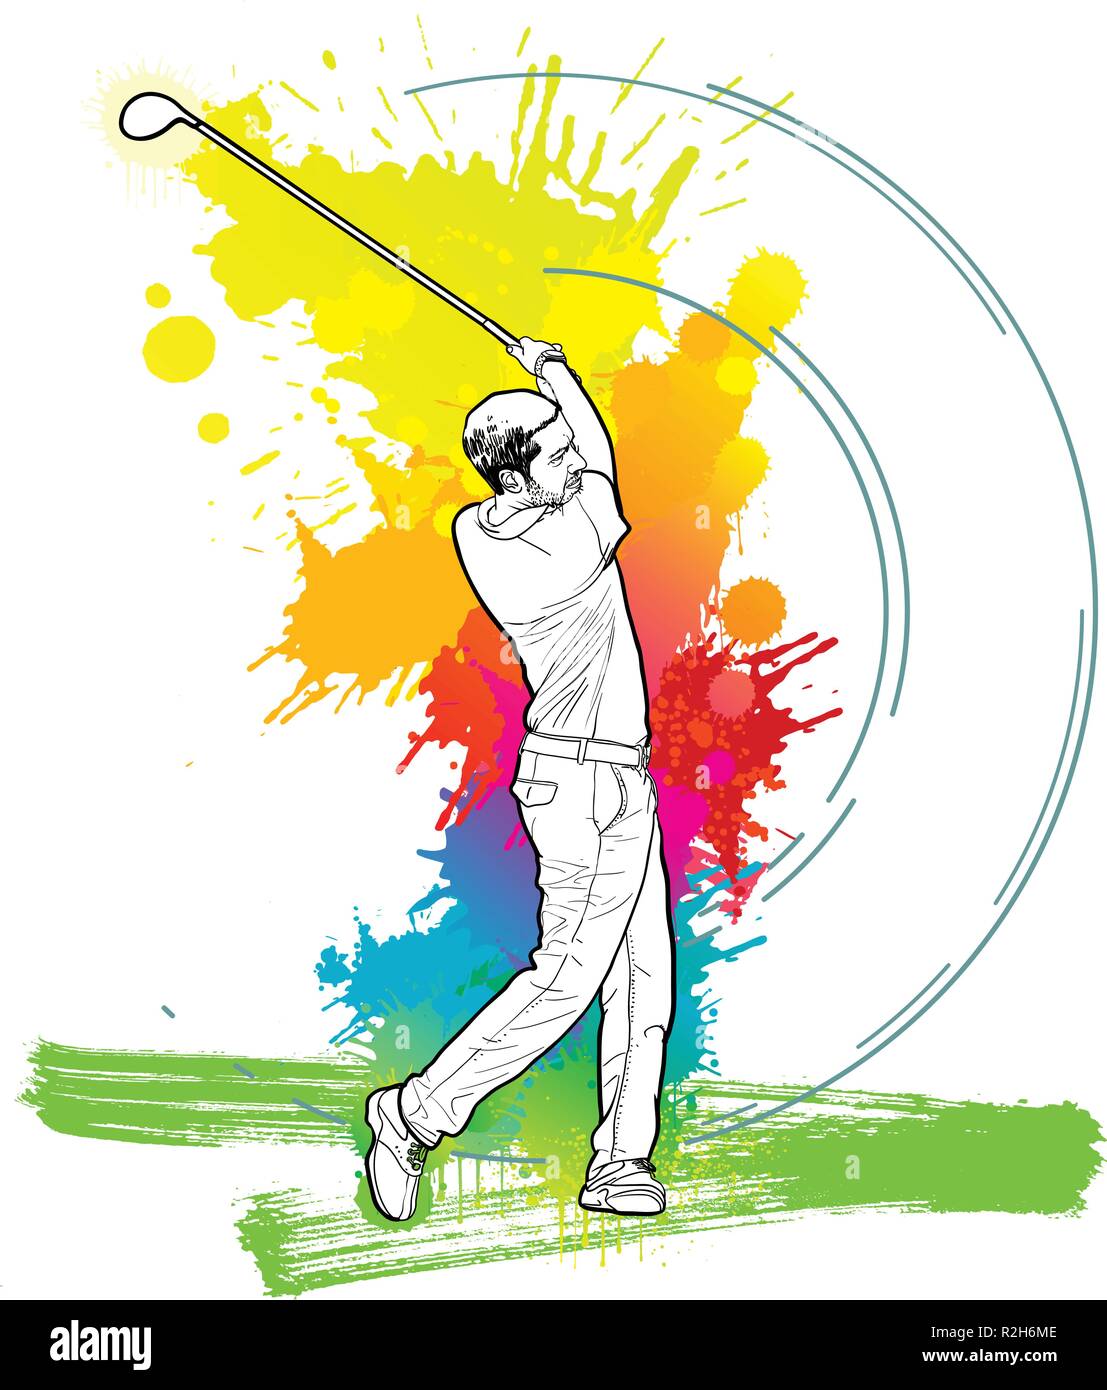 Golf player illustration. Player kicking golf ball. Stock Vector